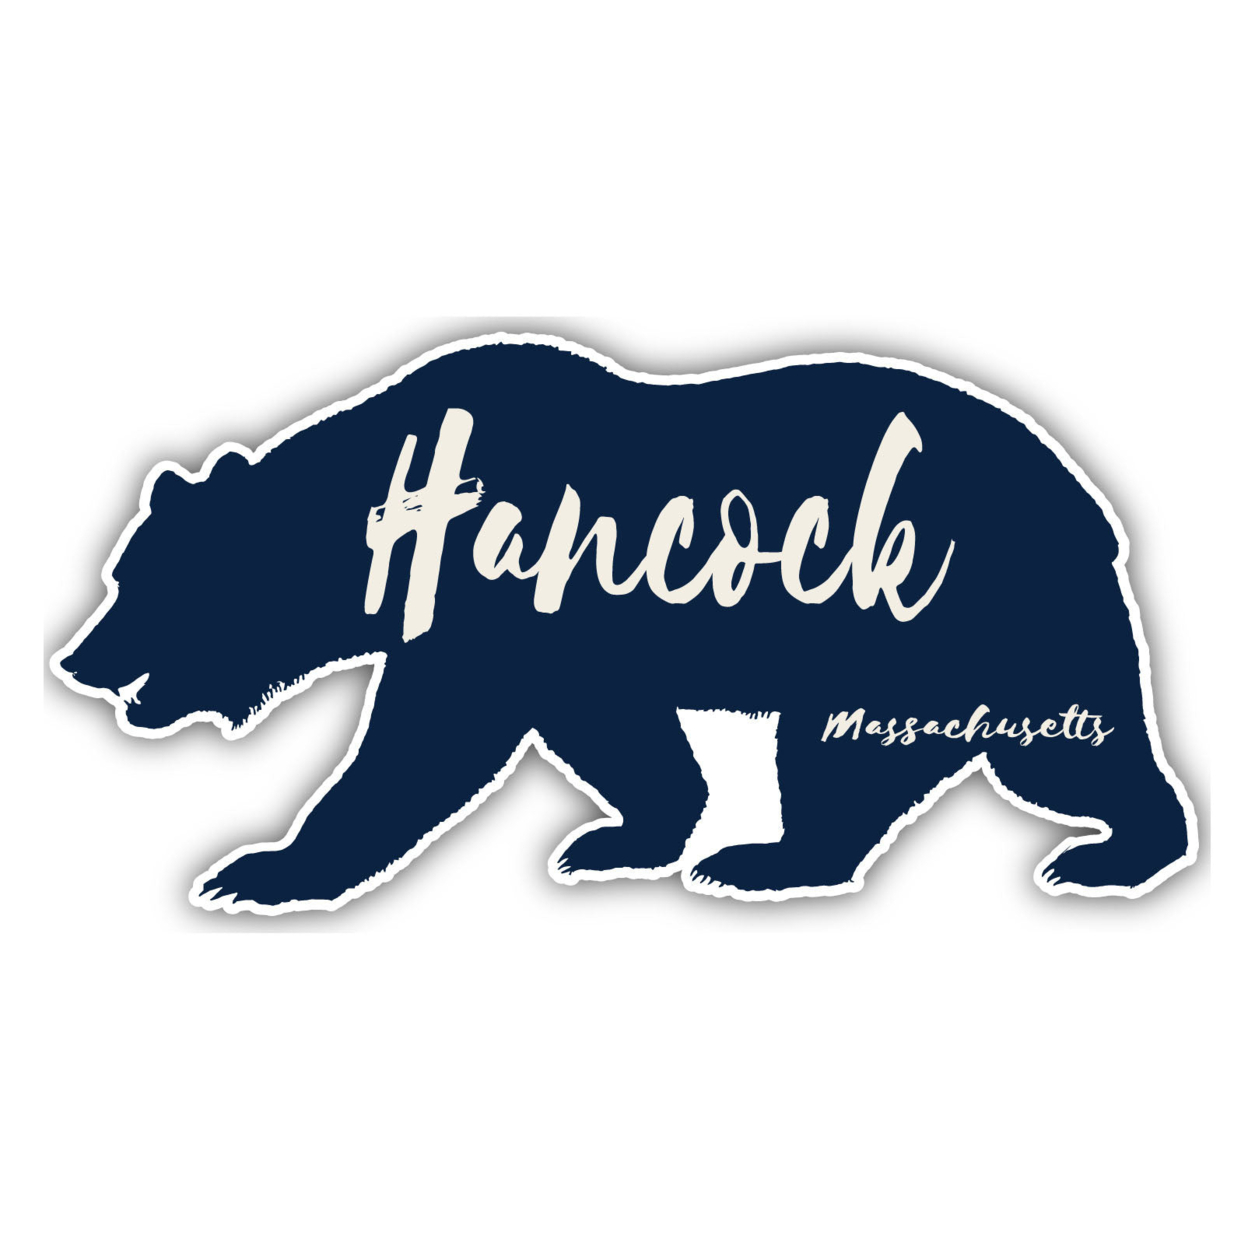 Hancock Massachusetts Souvenir Decorative Stickers (Choose Theme And Size) - Single Unit, 8-Inch, Adventures Awaits